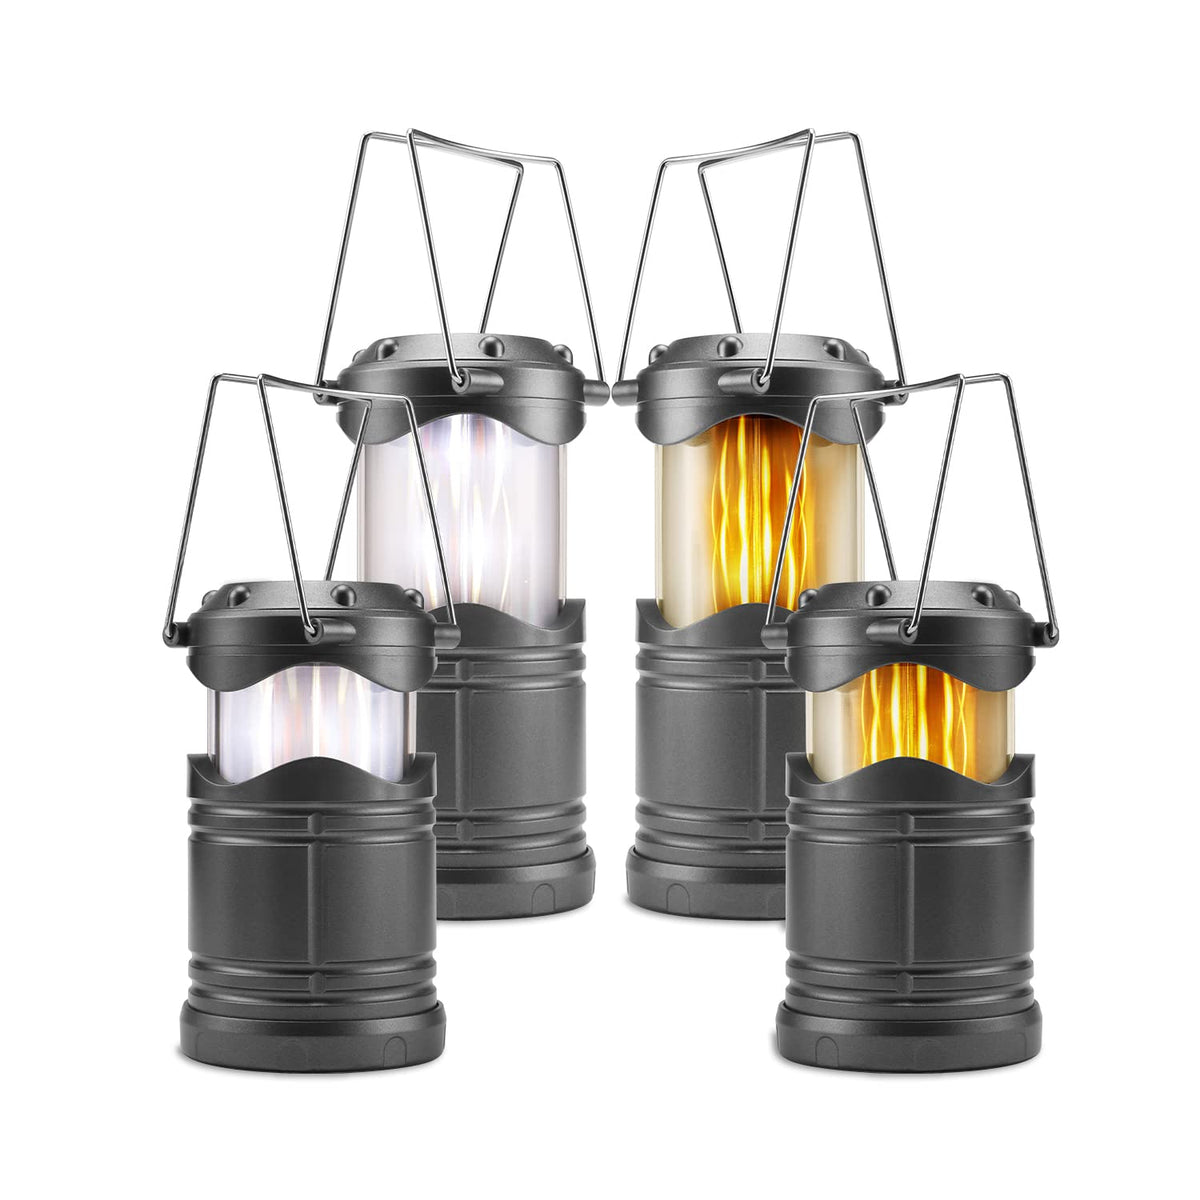 Lichamp 2 Pack LED Camping Lanterns, Battery Powered Lantern